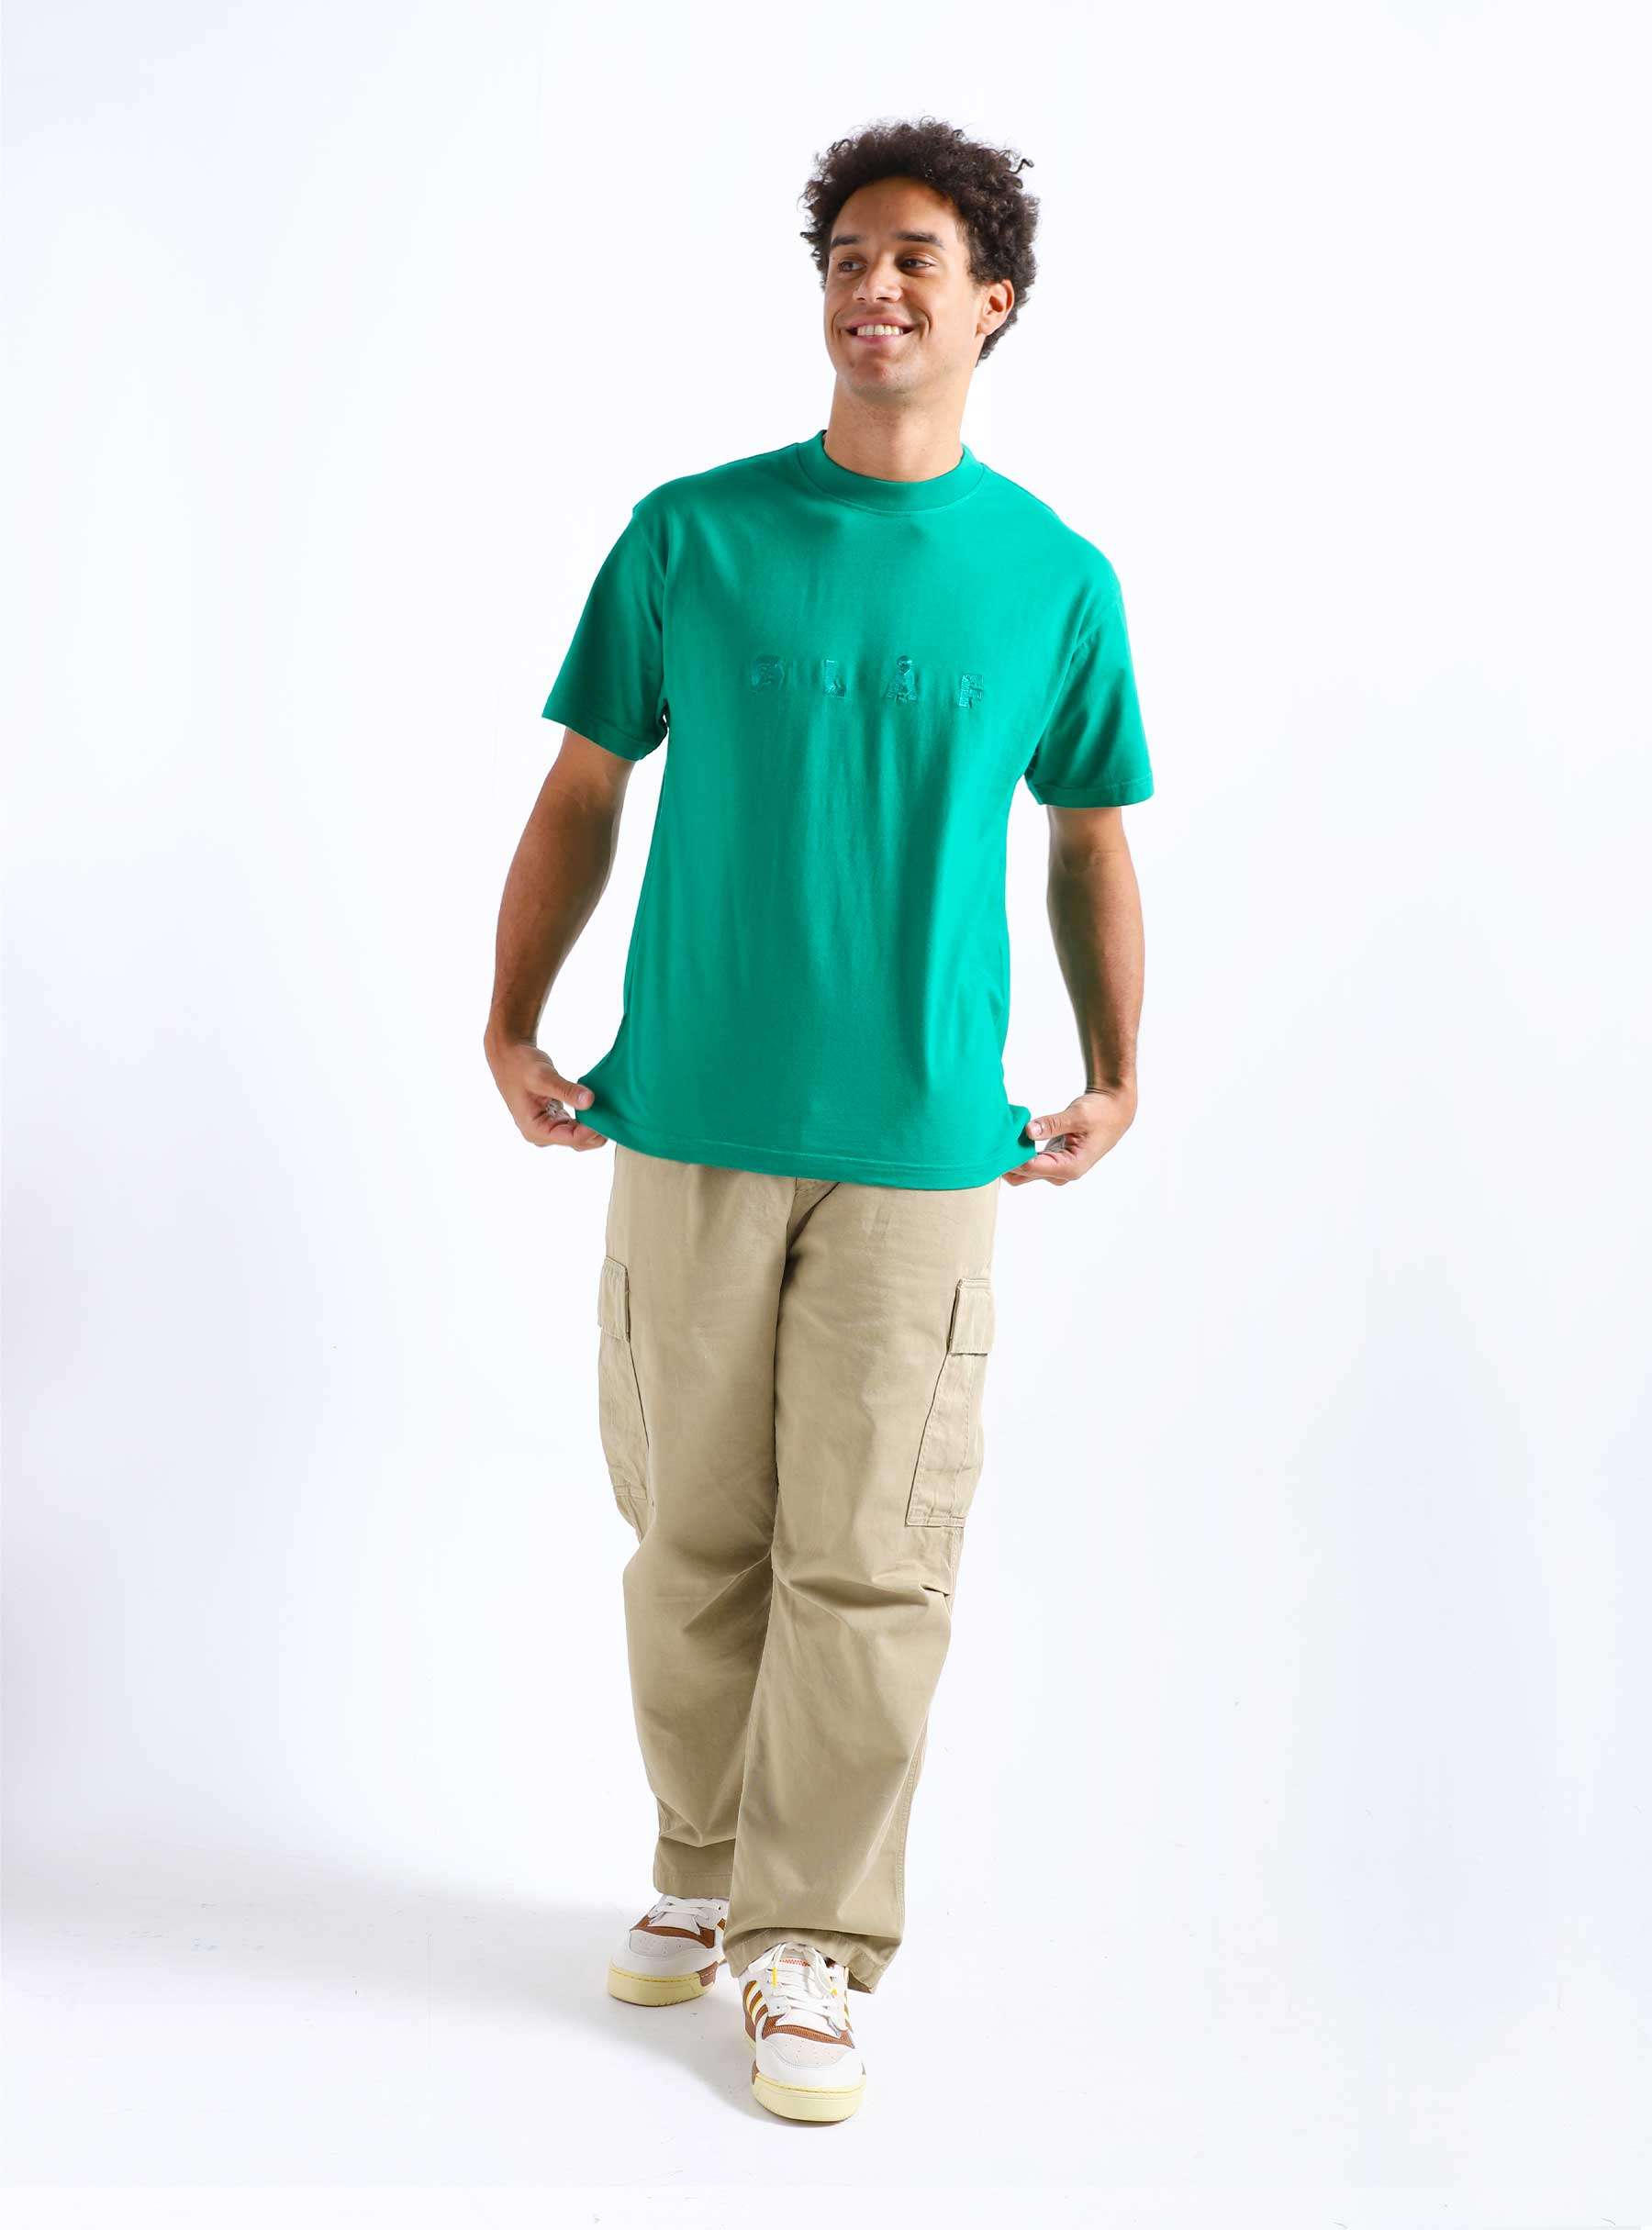 Chainstitch T-shirt Ocean Green M120104